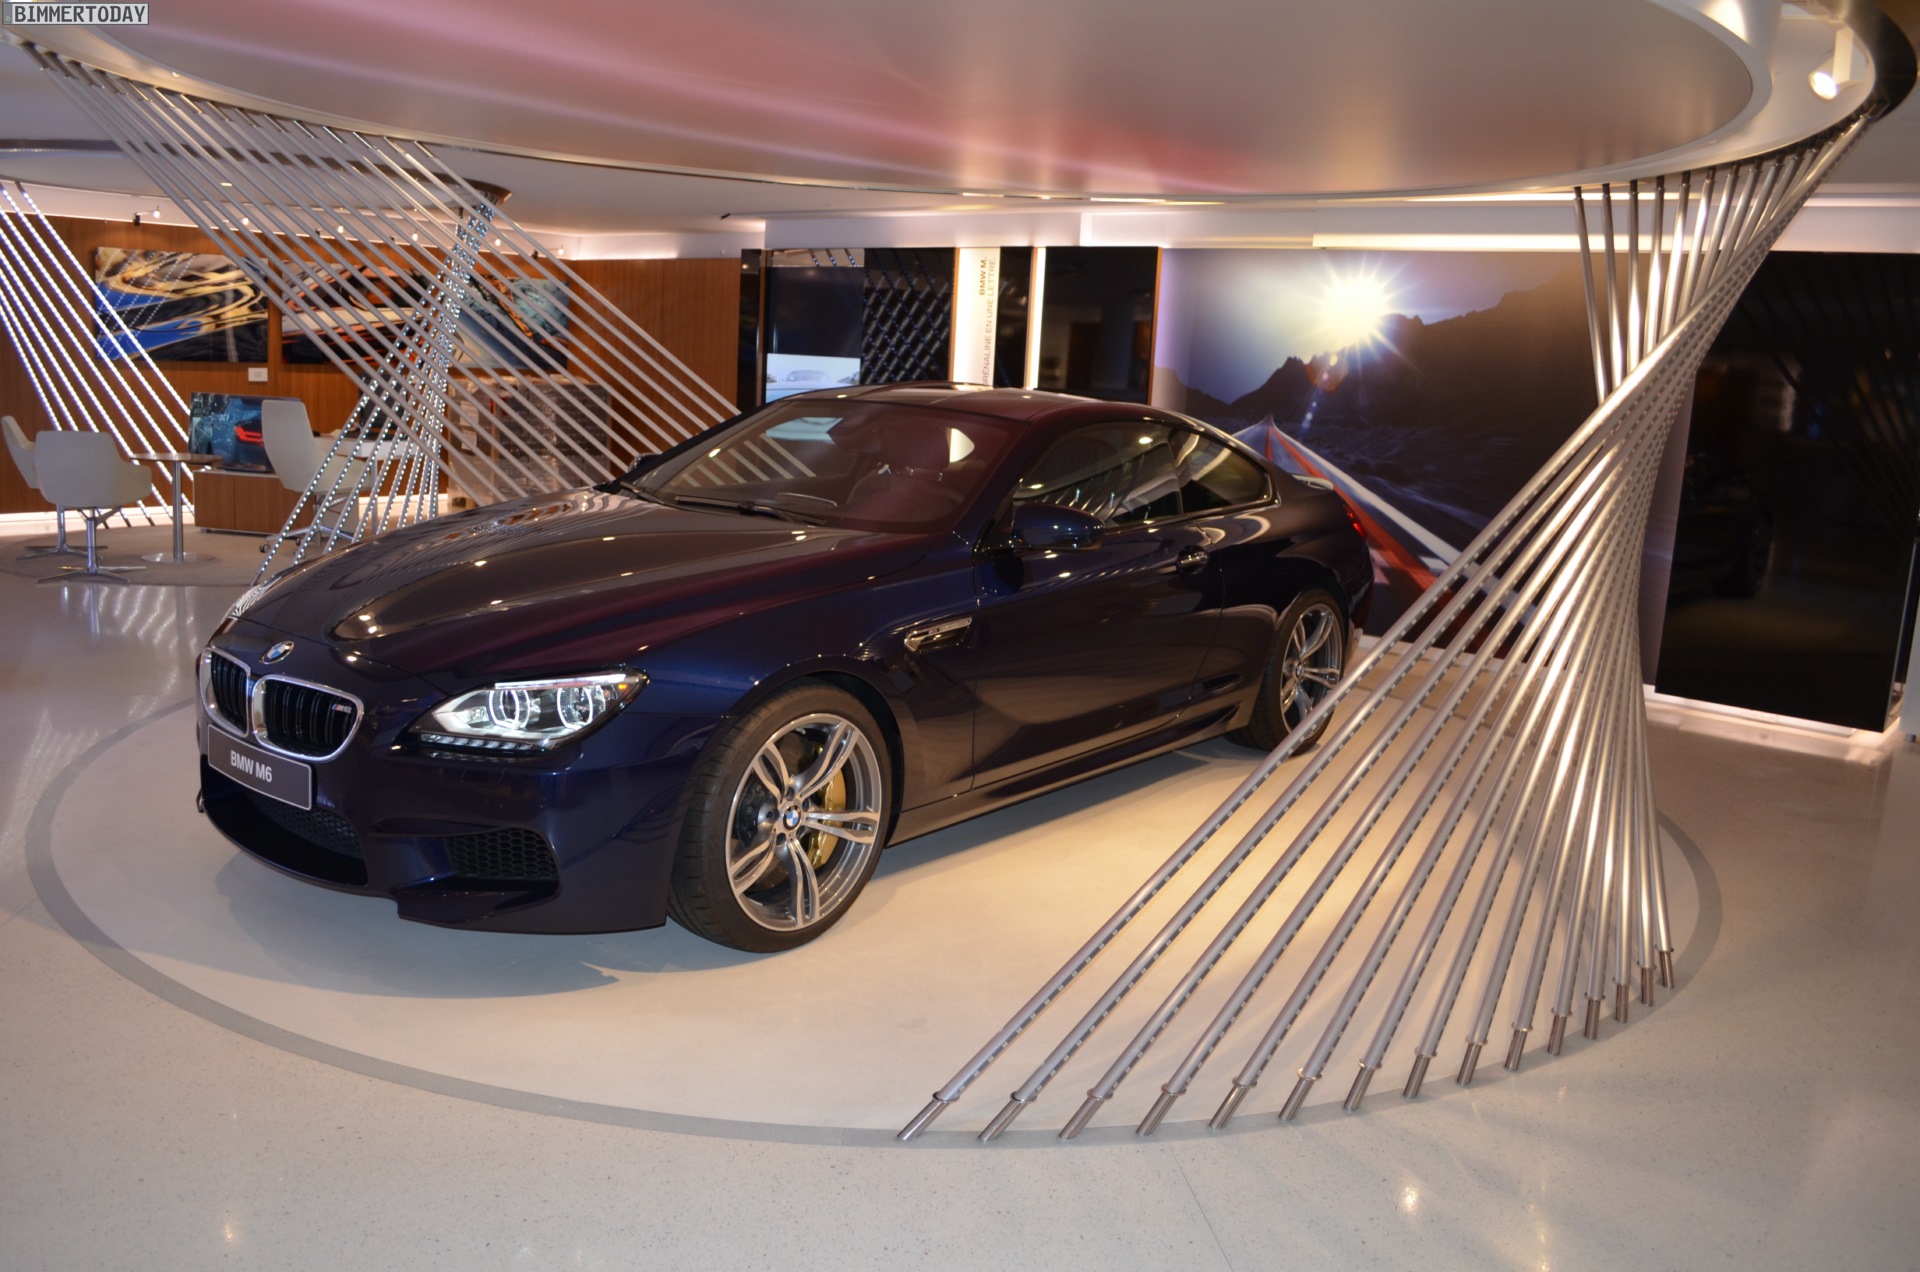 BMW George V Paris Showroom 2014 Flagship Store Champs Elysees 10